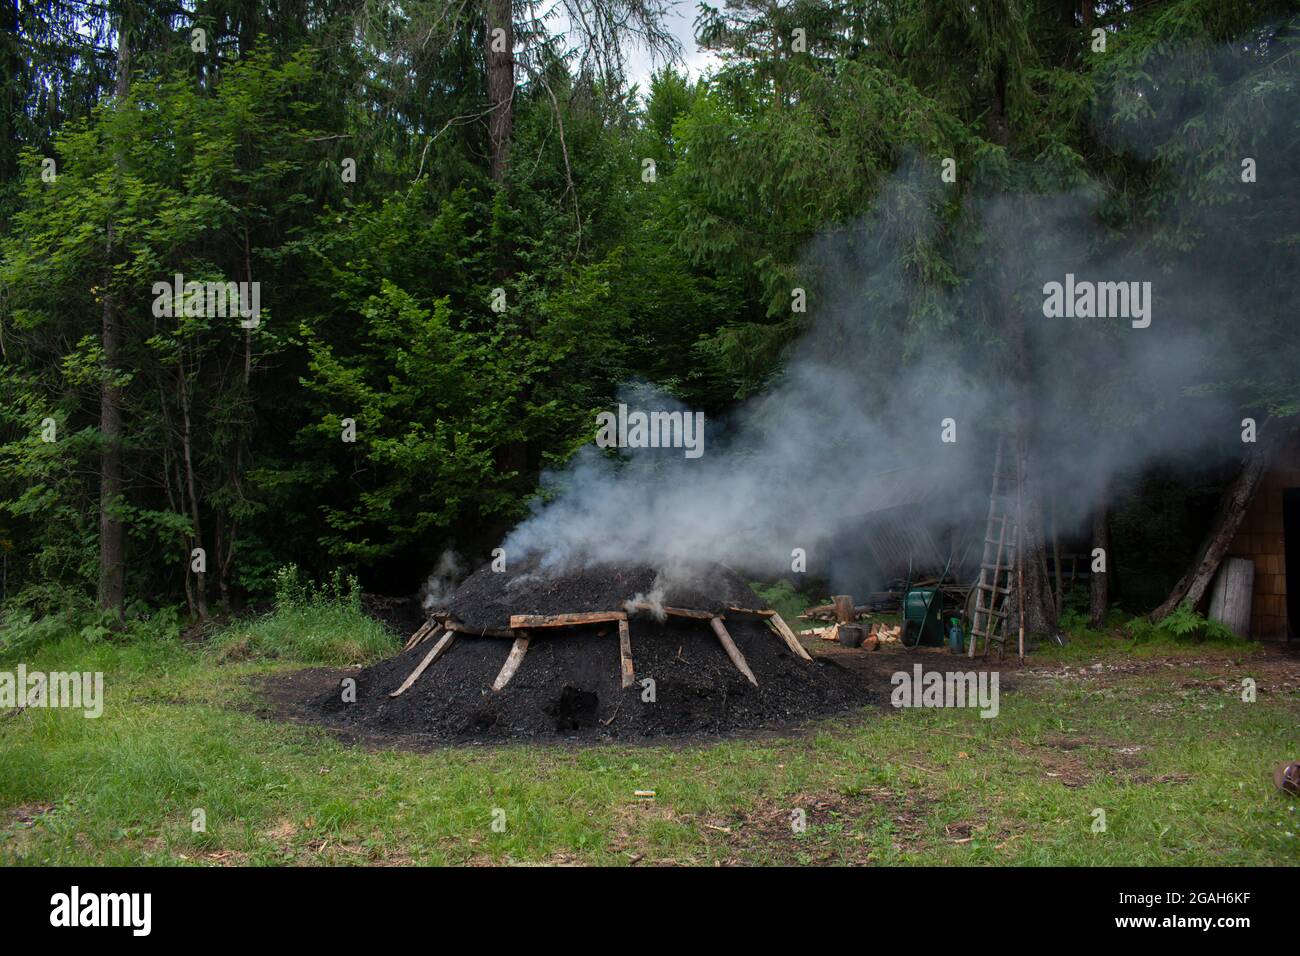 Traditional Charcoal making in Gozd Martuljek. Slovenia. Smoking mound of wood. Stock Photo